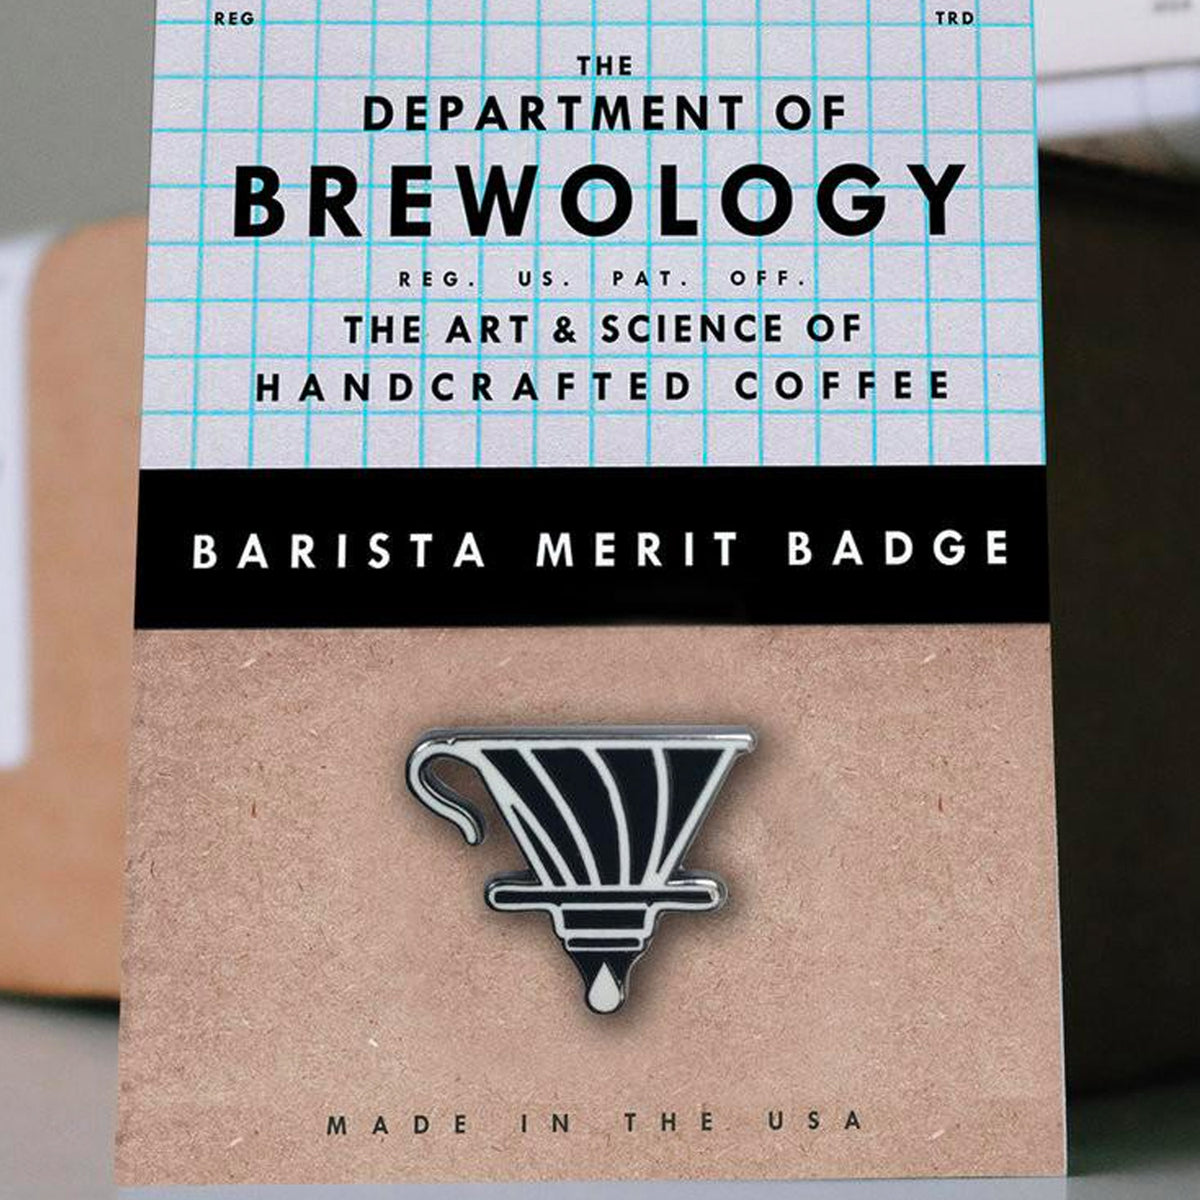 Barista Merit Badge Pins